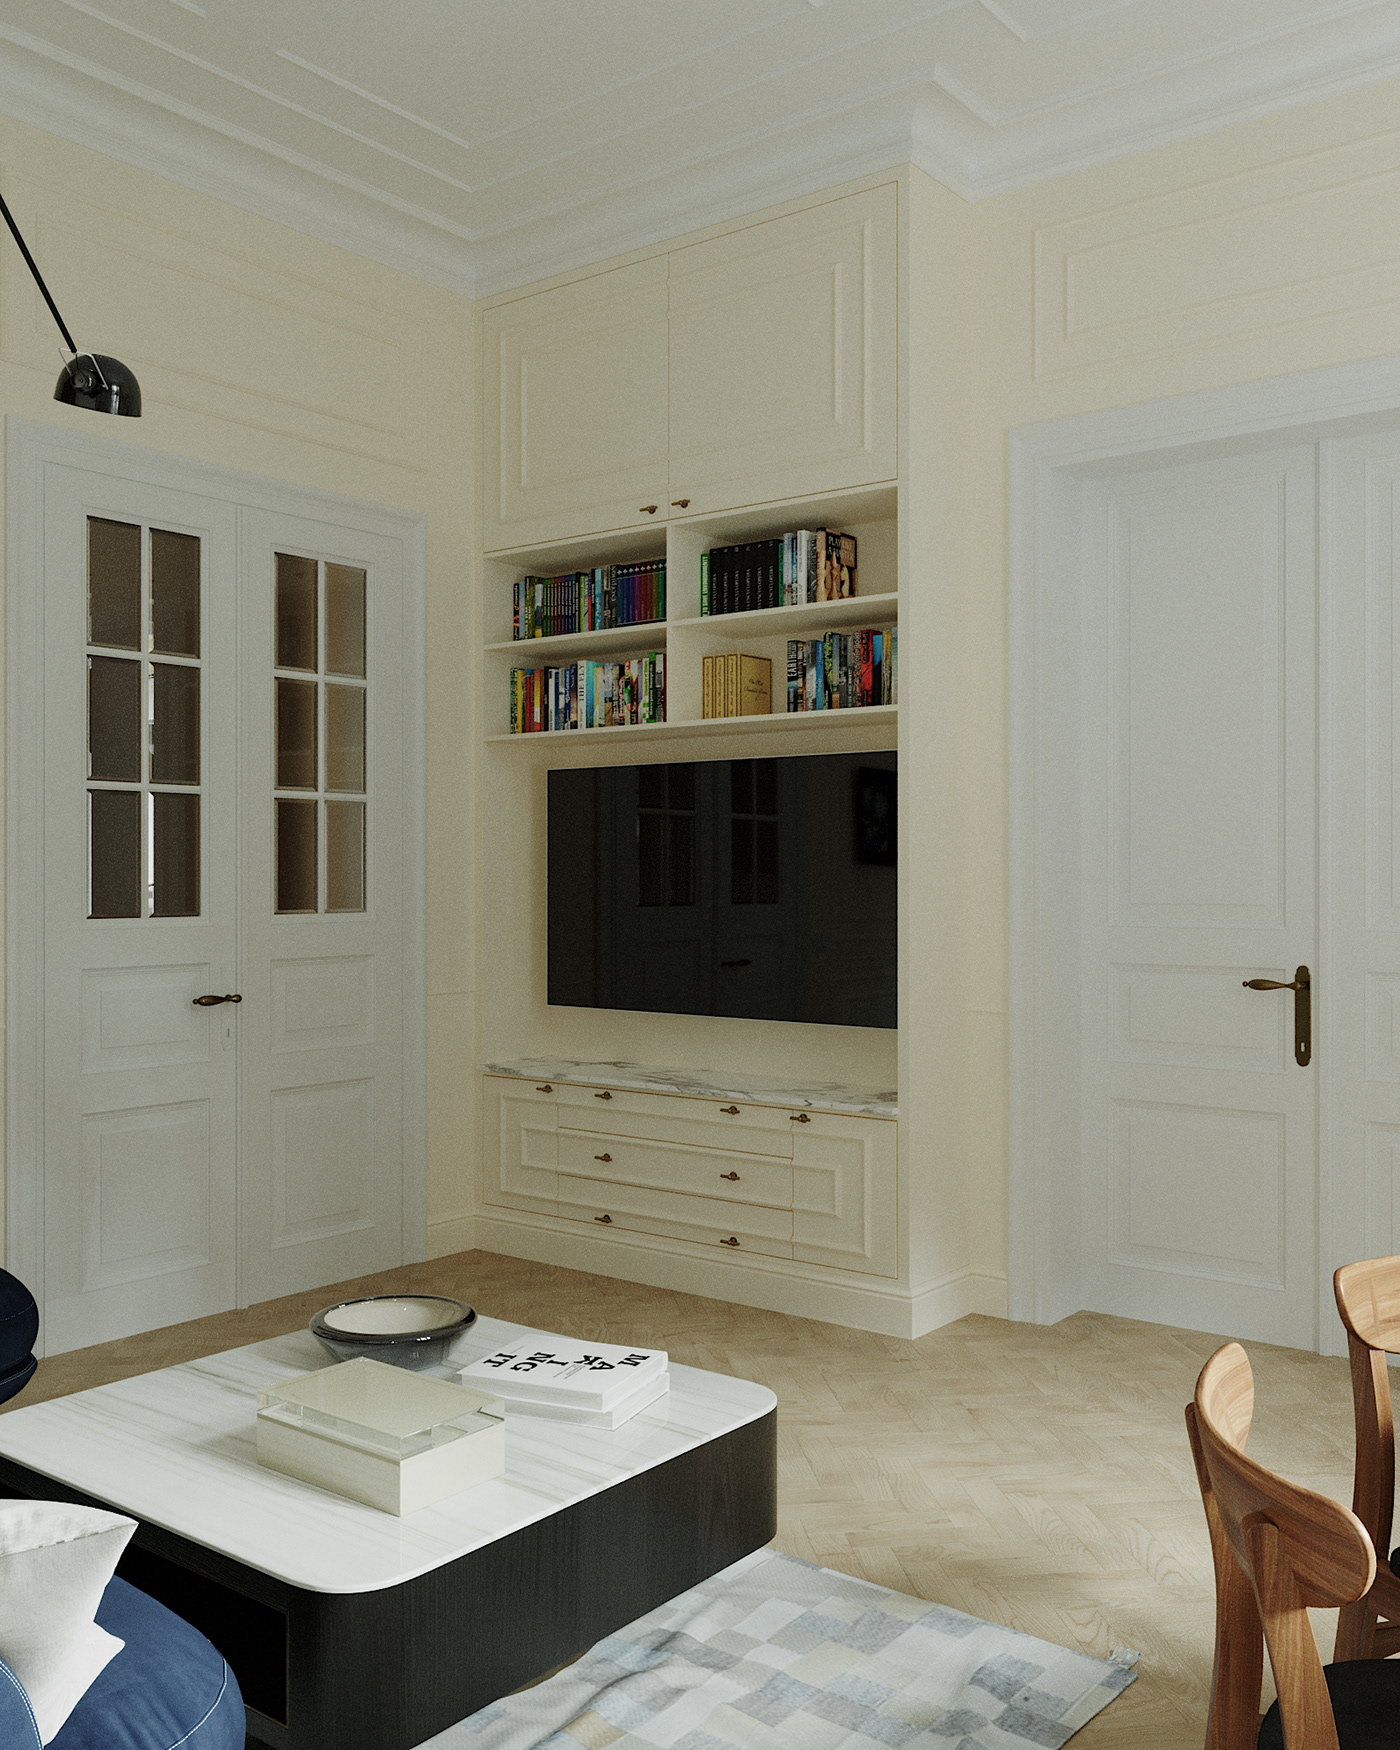 art deco art nouveau contemporary eclectic interior design  minimalist Parisian apartment prague